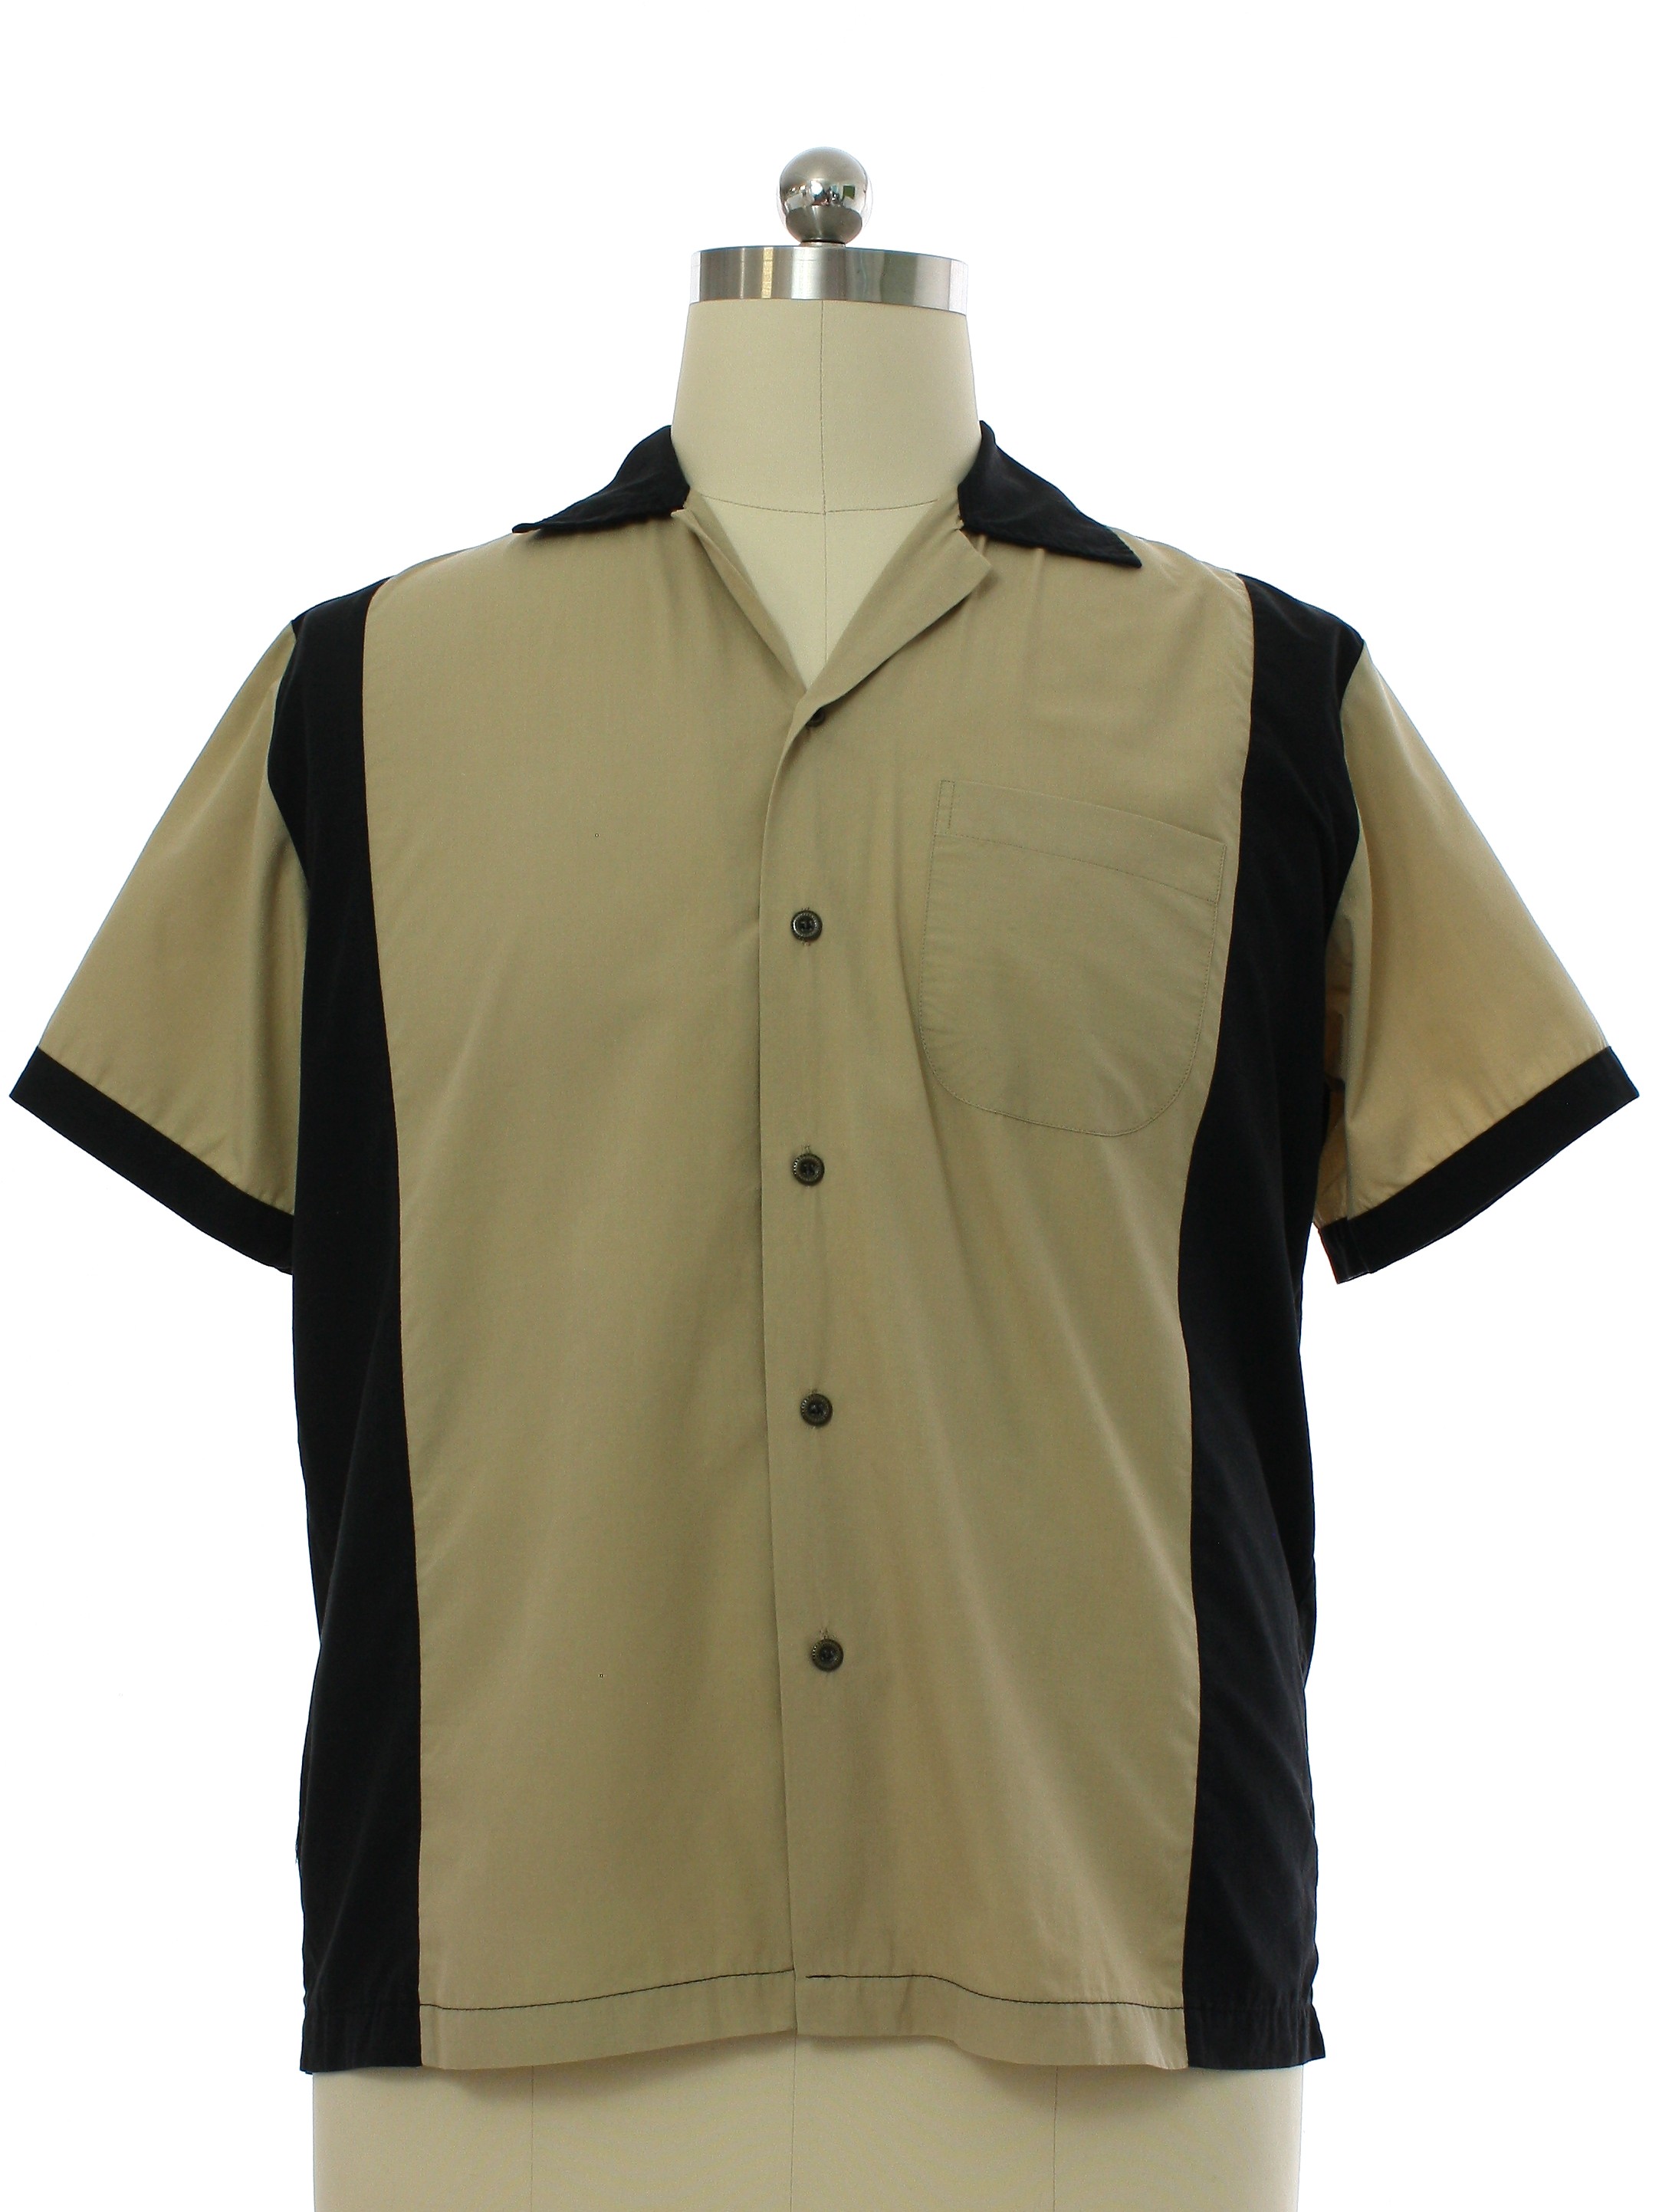 Bowling Shirt: 90s -Cruisin USA- Mens black and tan background cotton ...